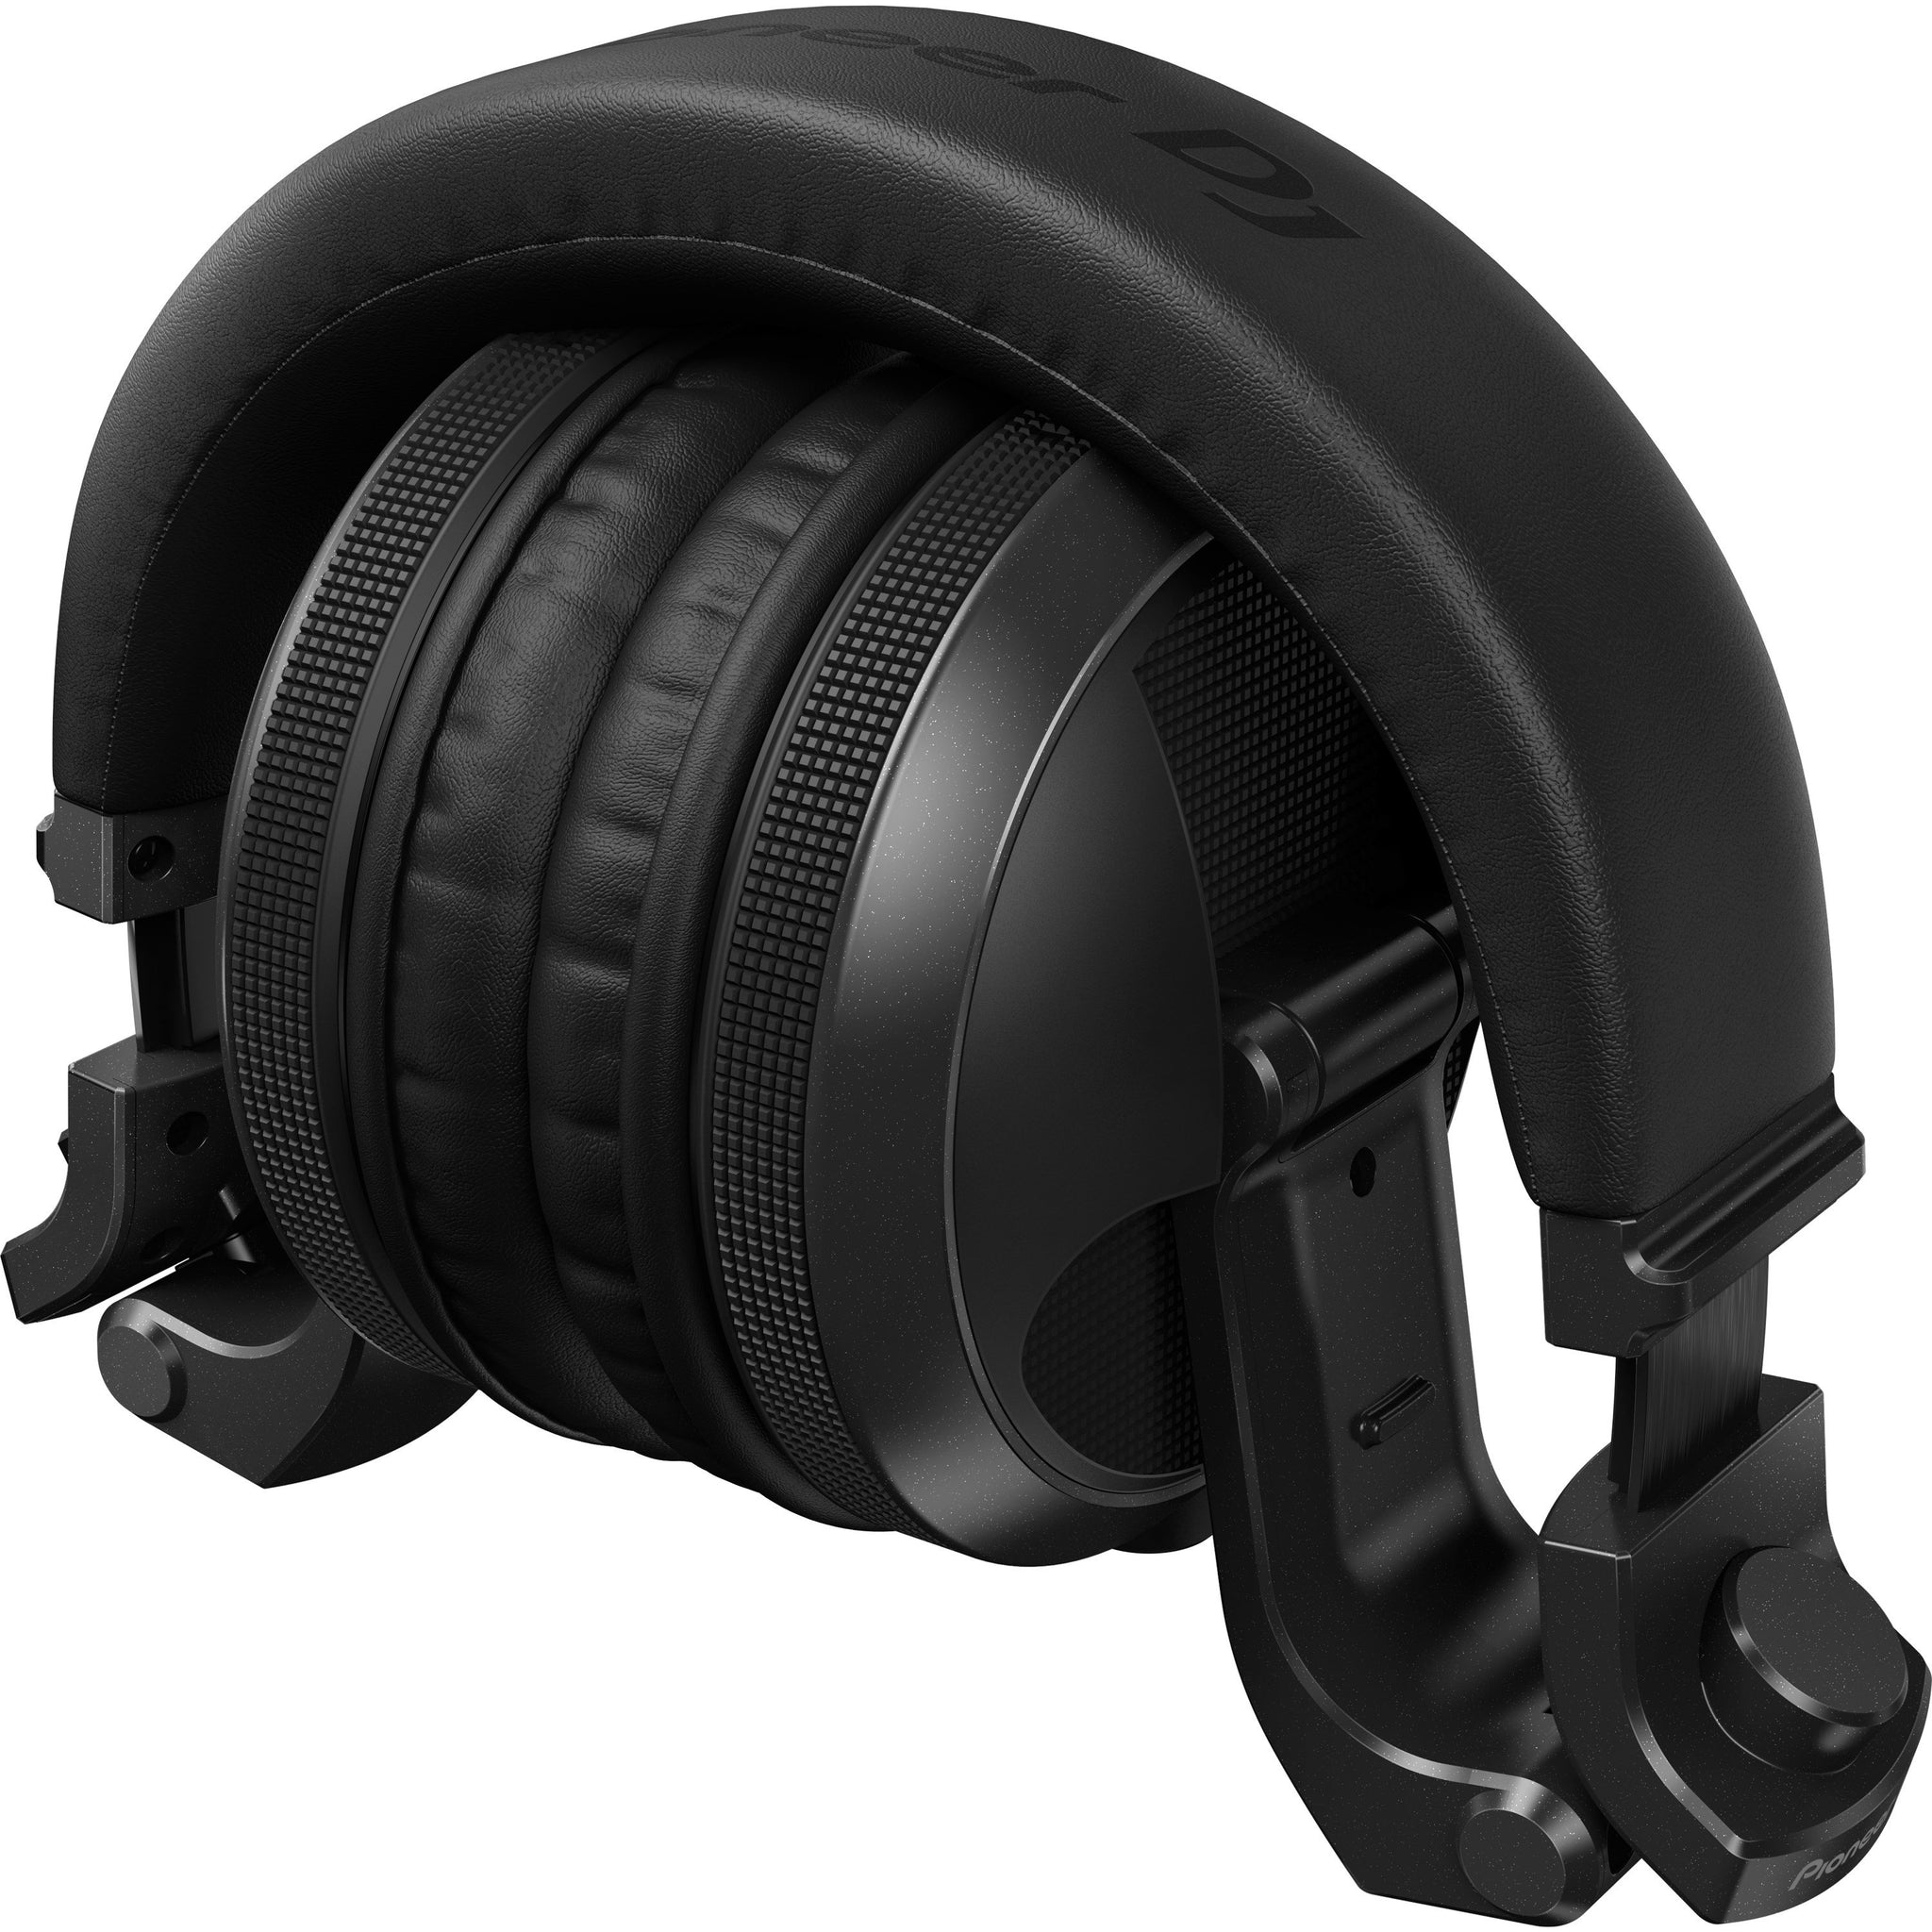 DJ Wireless, Bluetooth Black HDJ-X5BT-K Pioneer Music Center – Headphones Easy